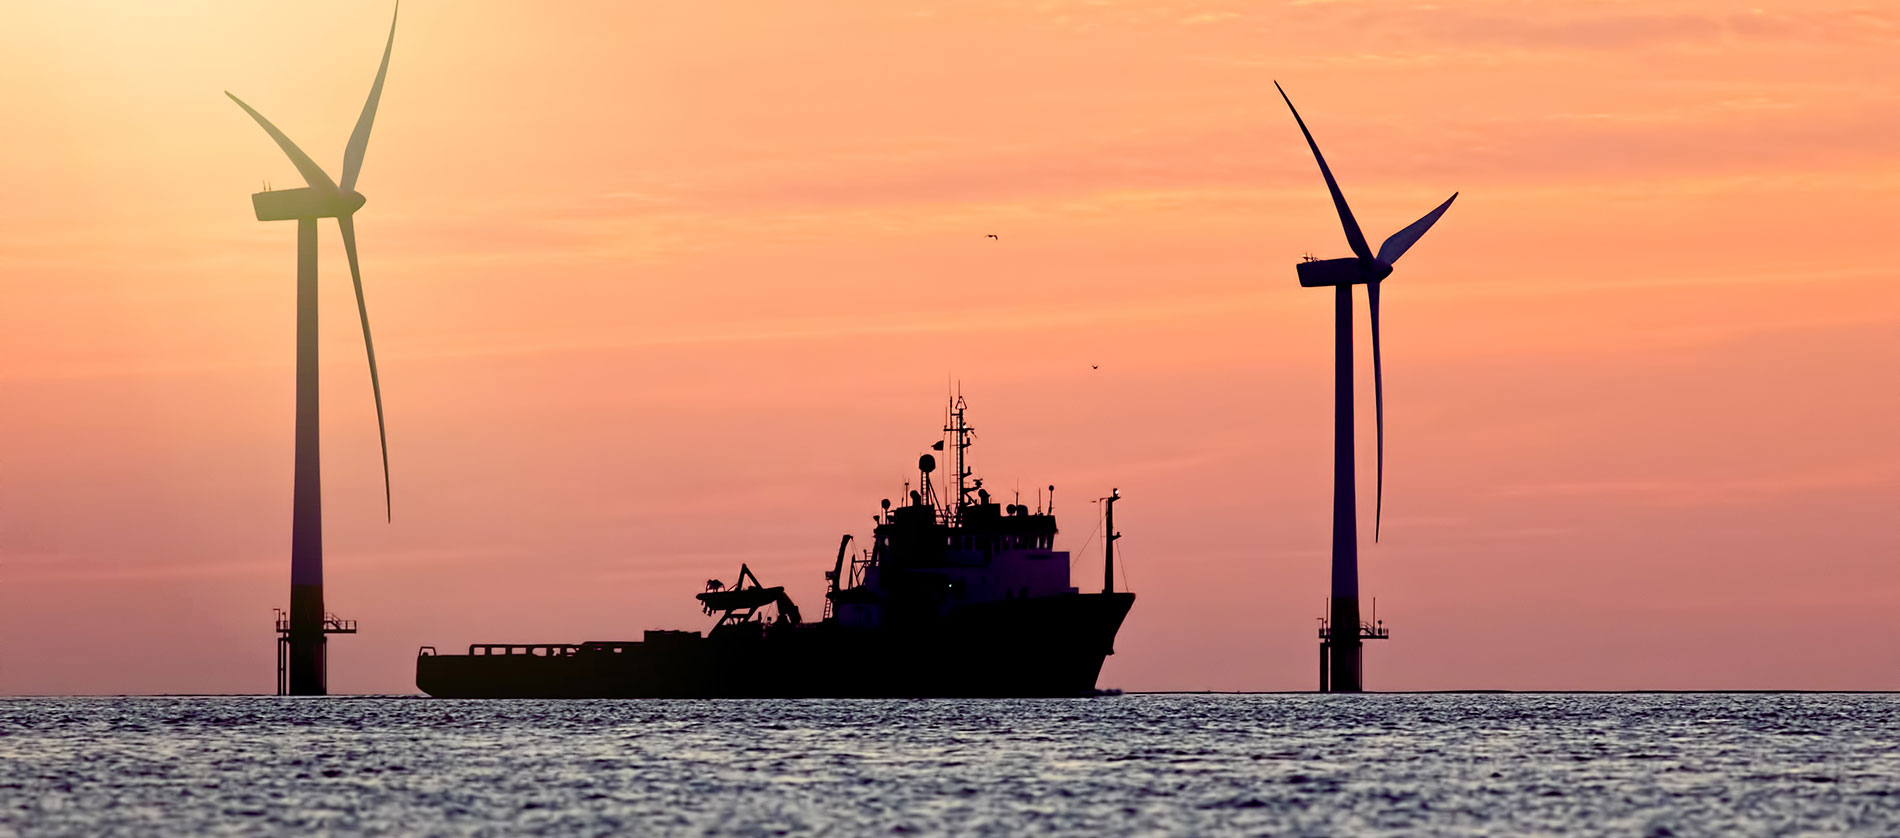 Seafarers tax advice for wind farm ship crew